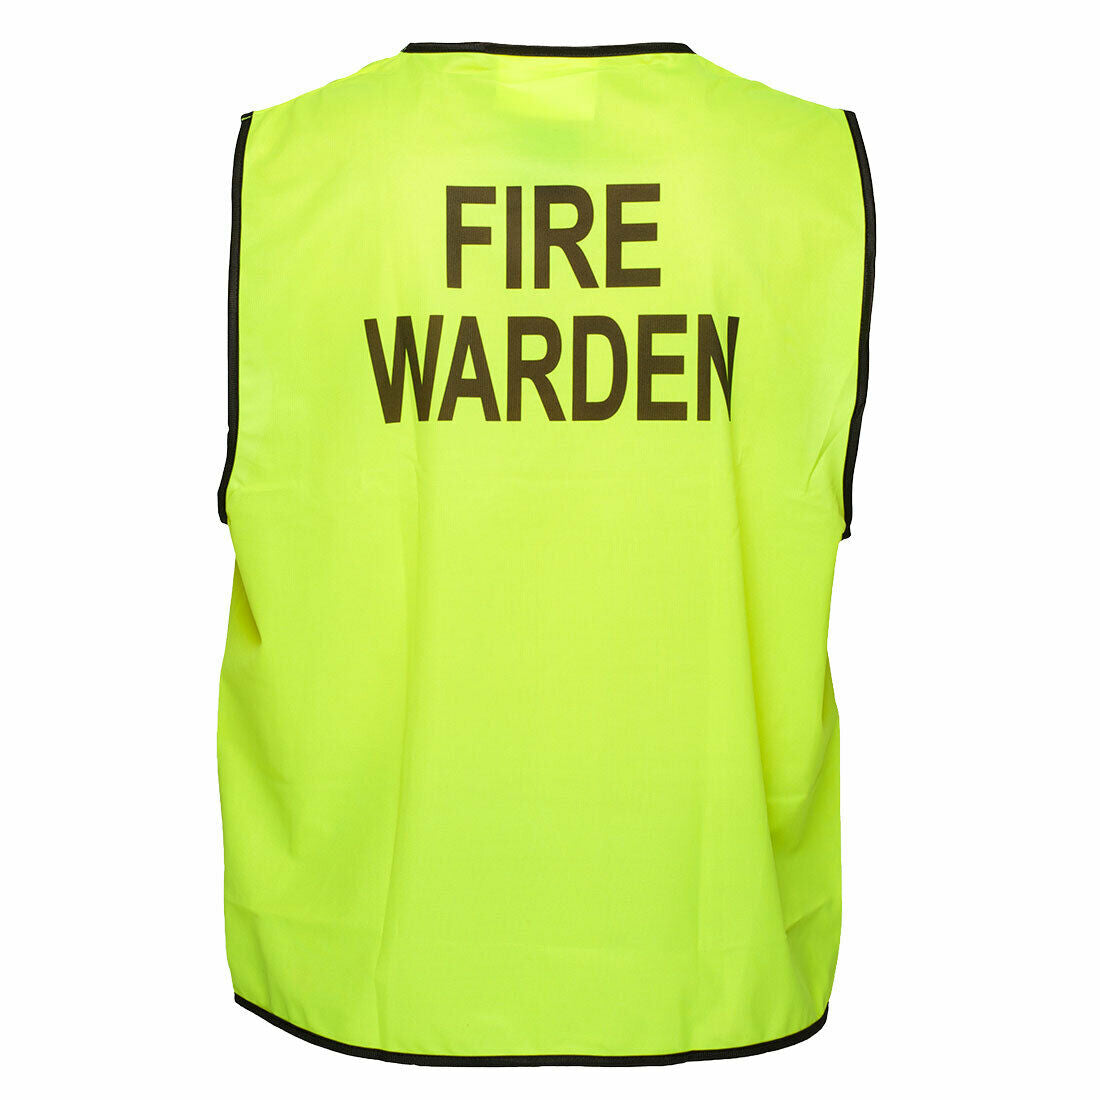 Portwest Fire Warden Hi-Vis Vest Class D Comfort Tape Work Safety MV118-Collins Clothing Co